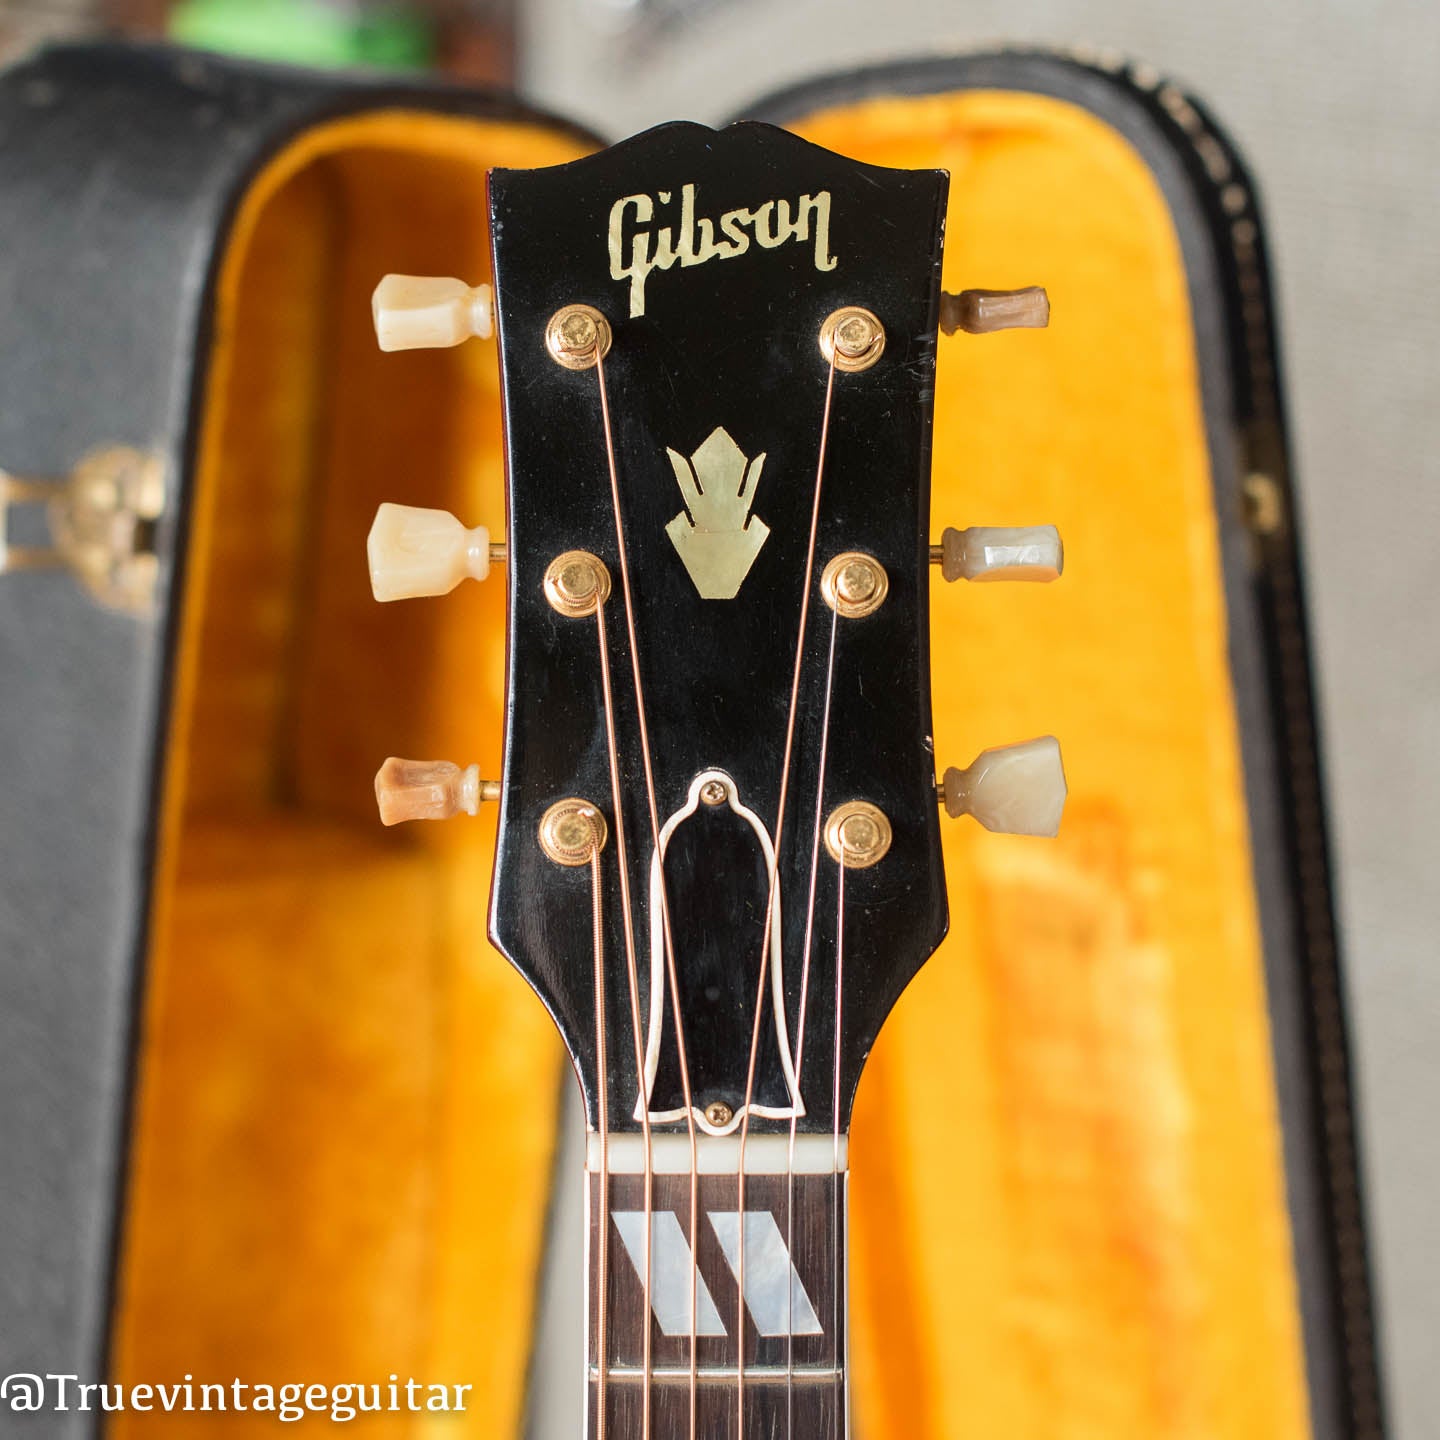 Headstock, pearl Gibson logo, Vintage 1963 Gibson Hummingbird acoustic guitar